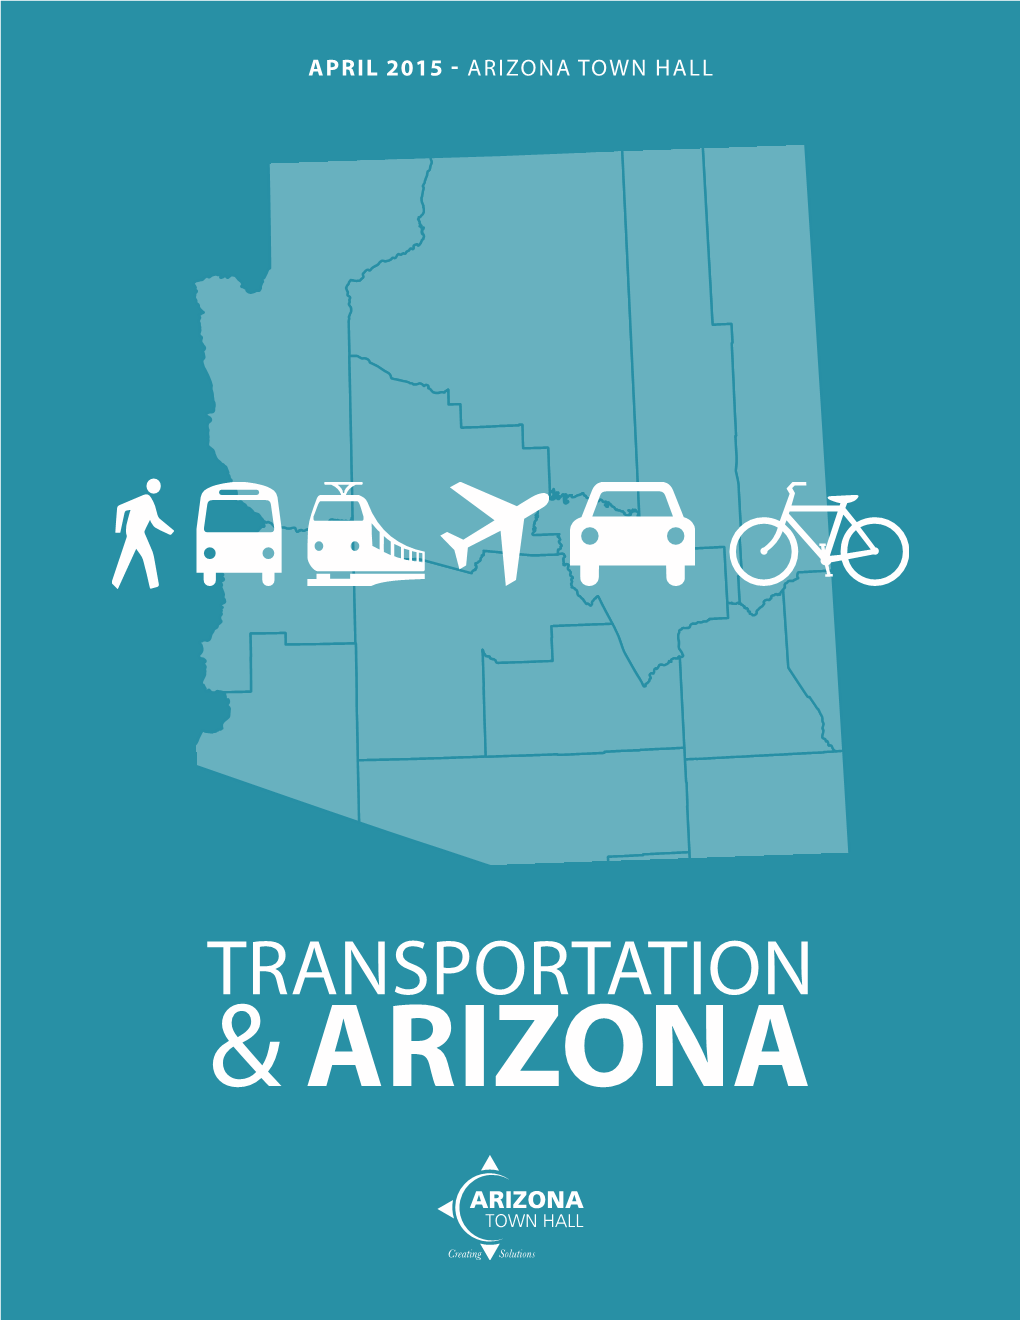 Transportation and Arizona